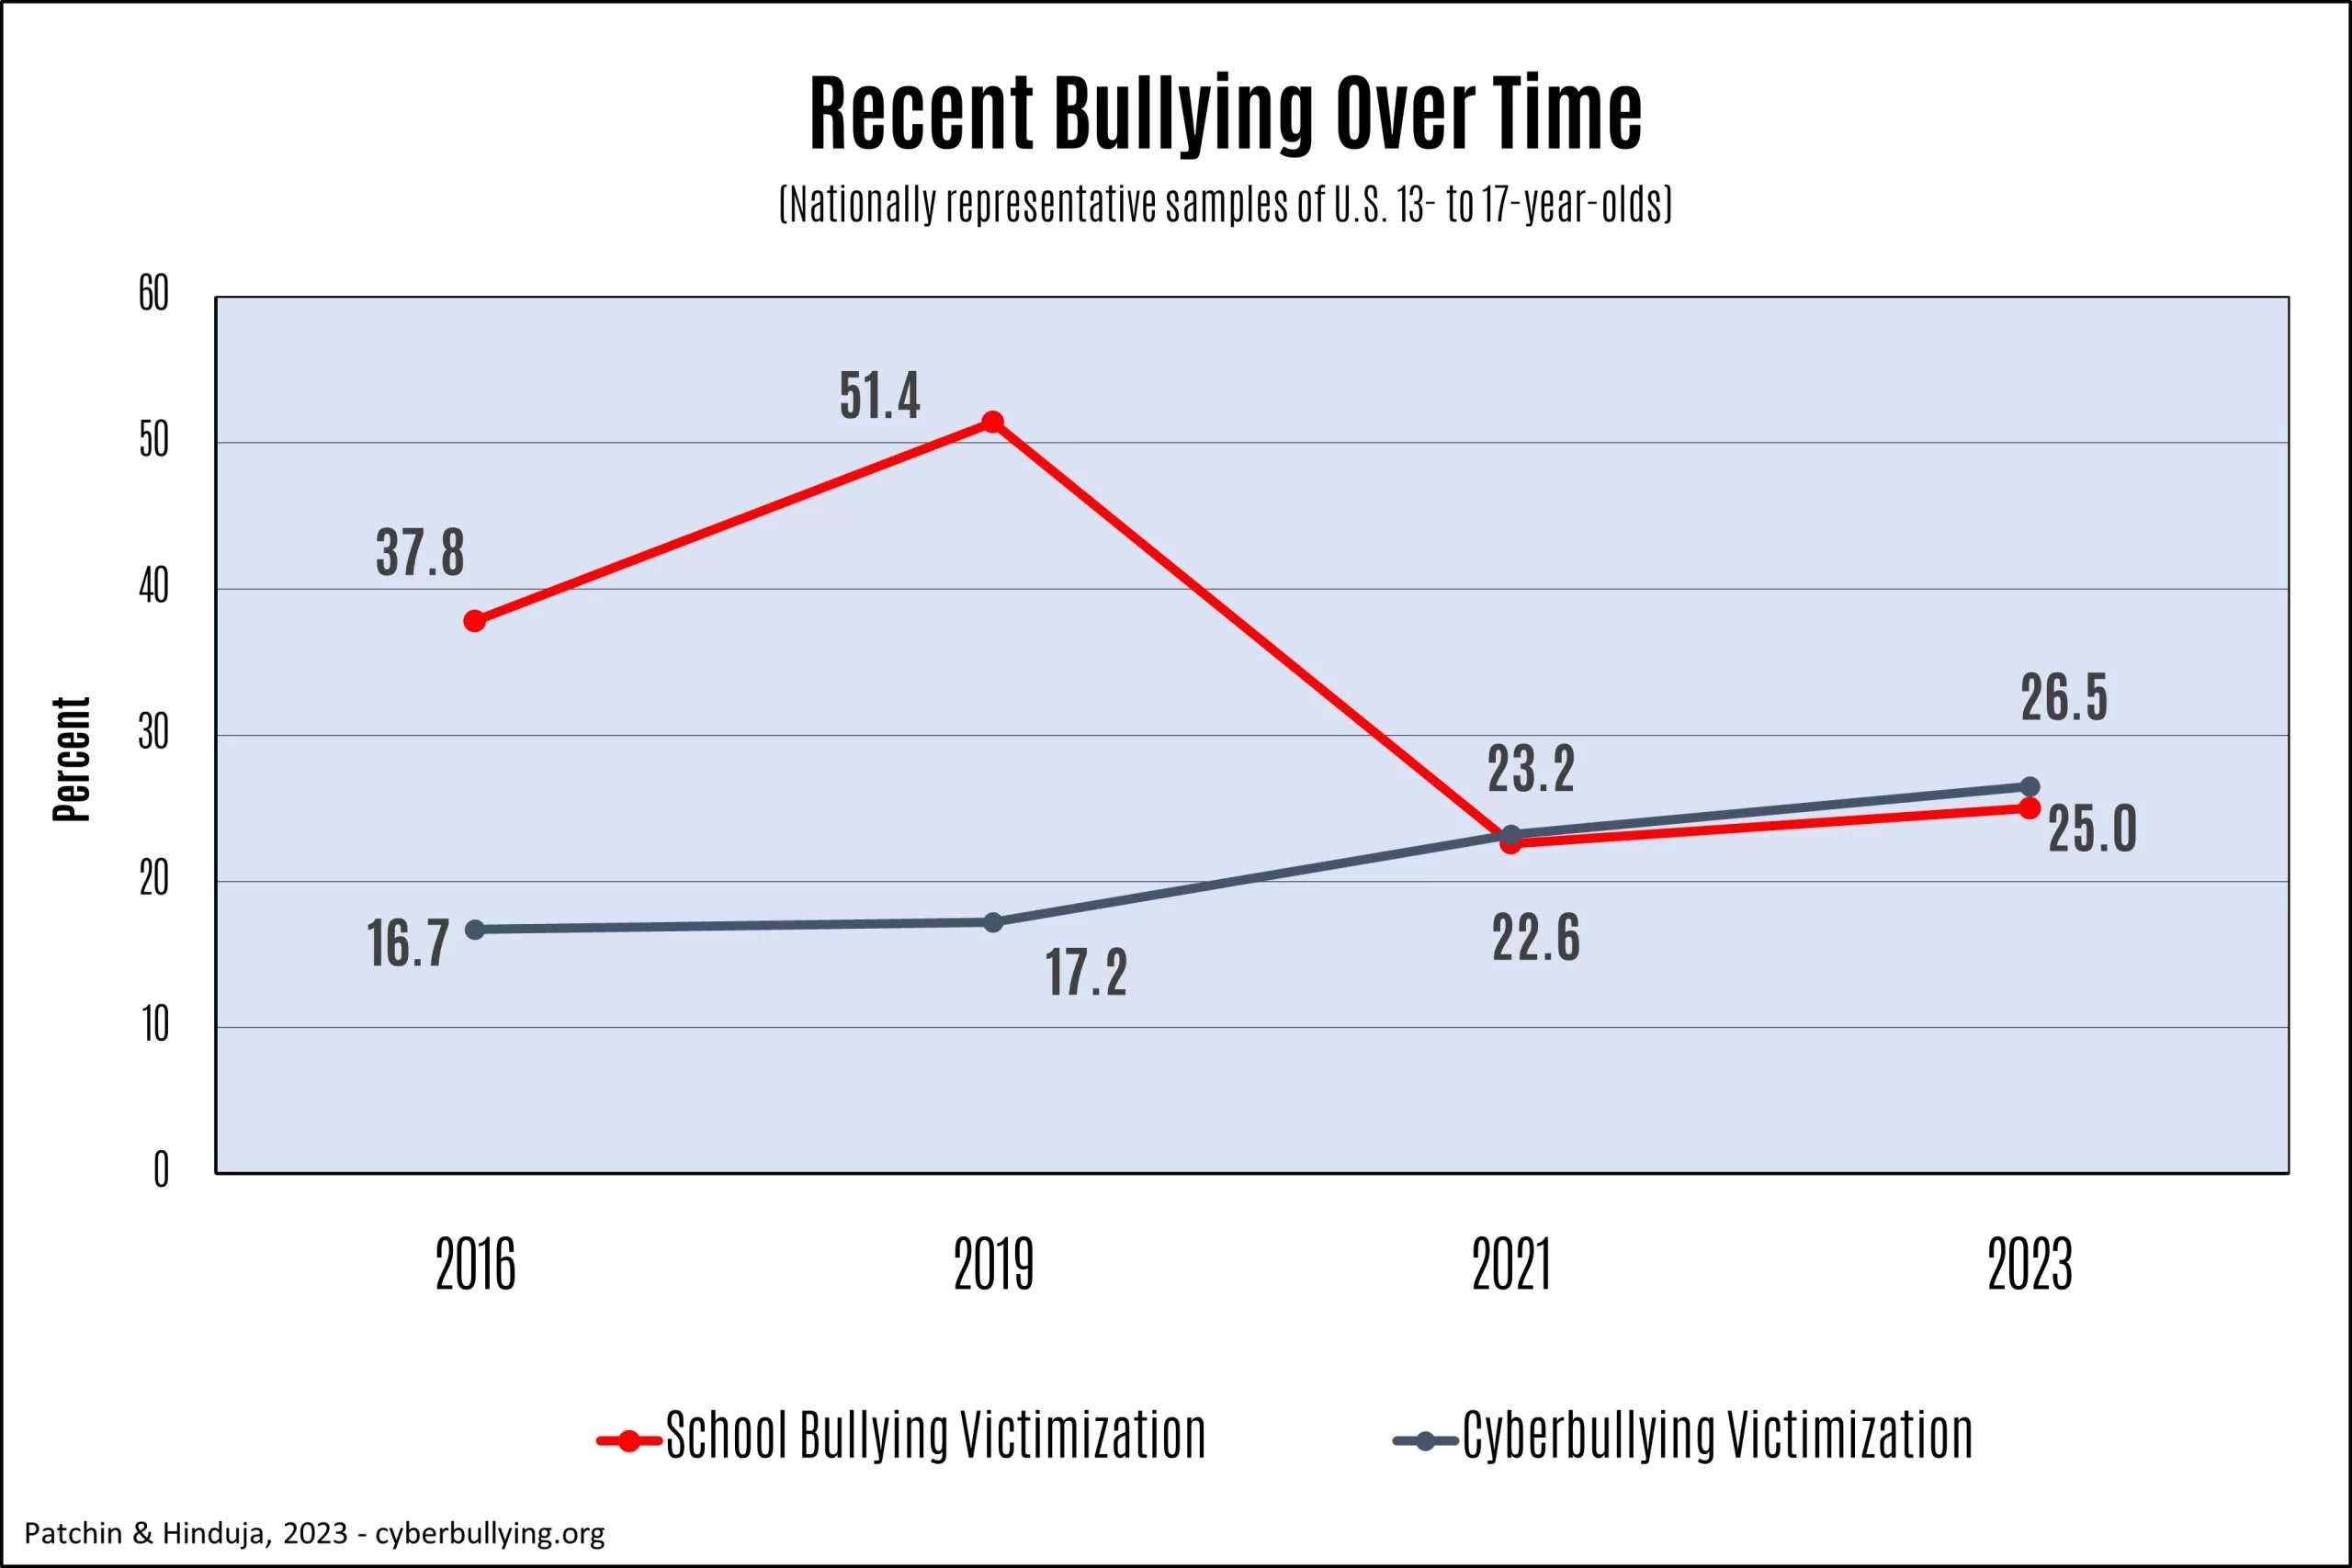 32 Shocking Bullying Statistics to Raise Awareness in 2023